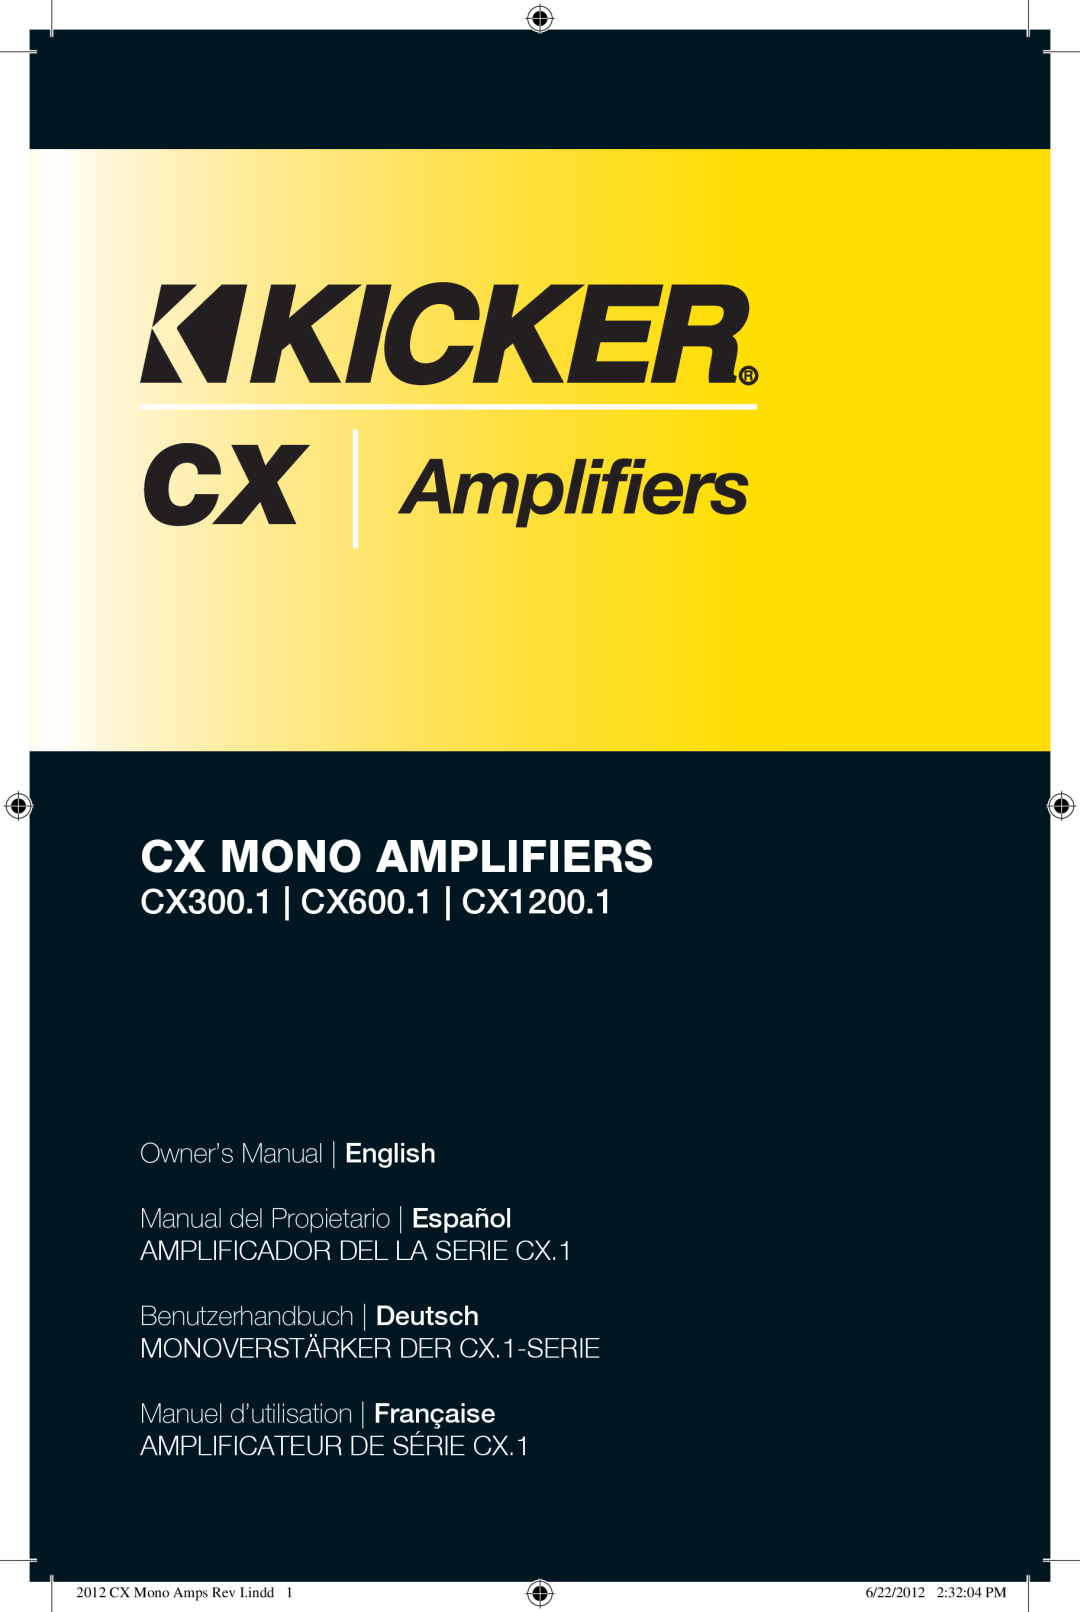 Kicker owner manual Cx Mono Amplifiers, CX300.1 | CX600.1 | CX1200.1, Owner’s Manual | English 